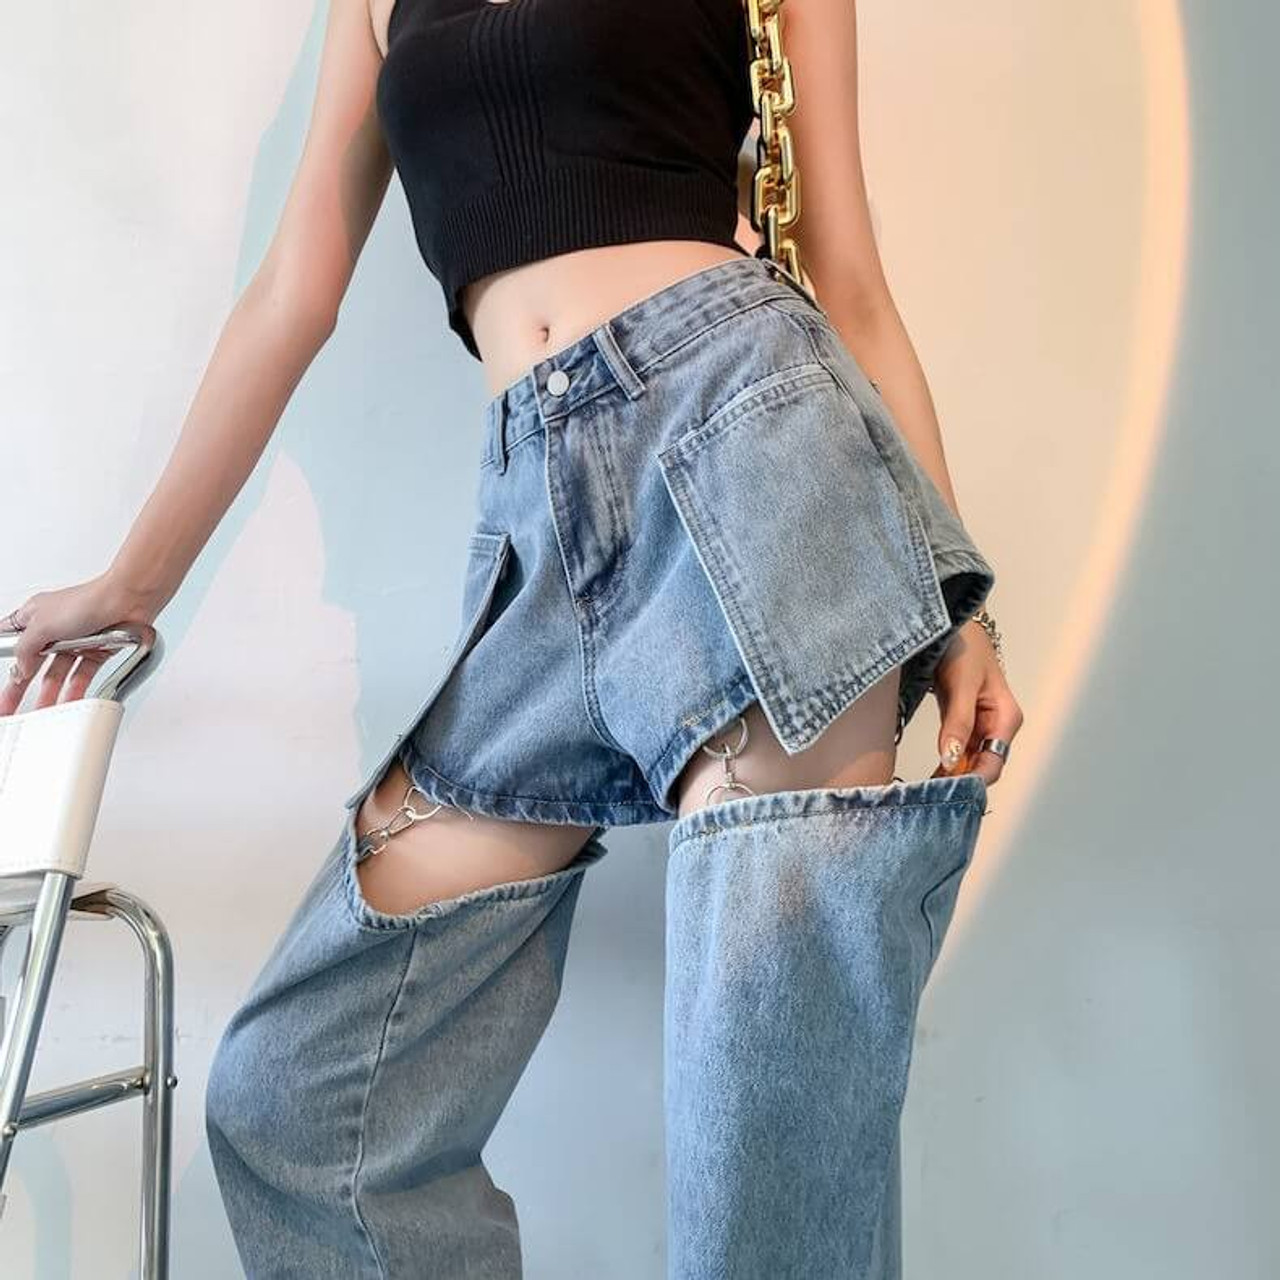 Egirl Ripped Chain Pants - Cosmique Studio